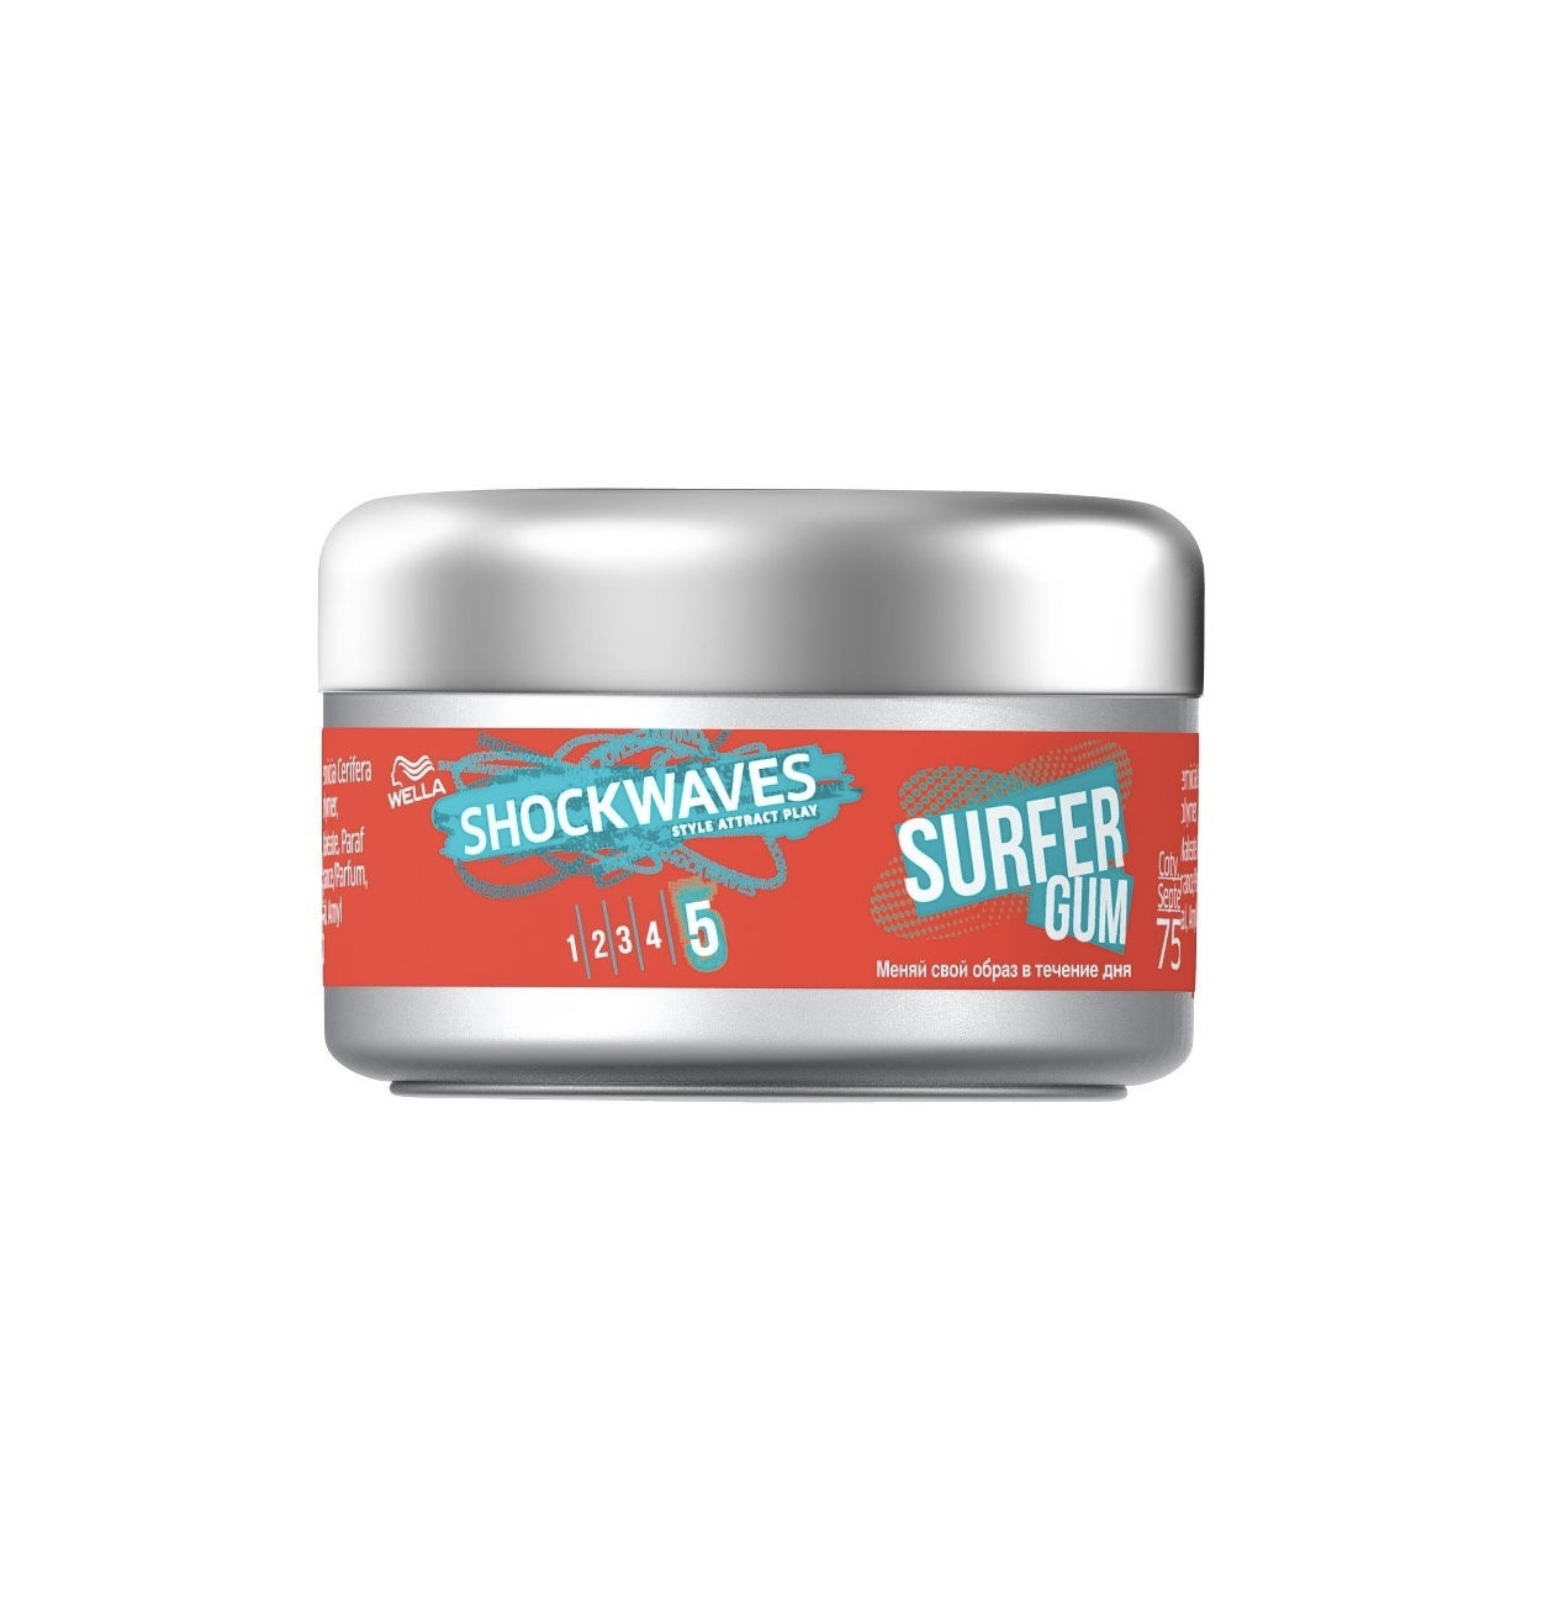   / Wella Shockwaves -     Surfer Gum 75 